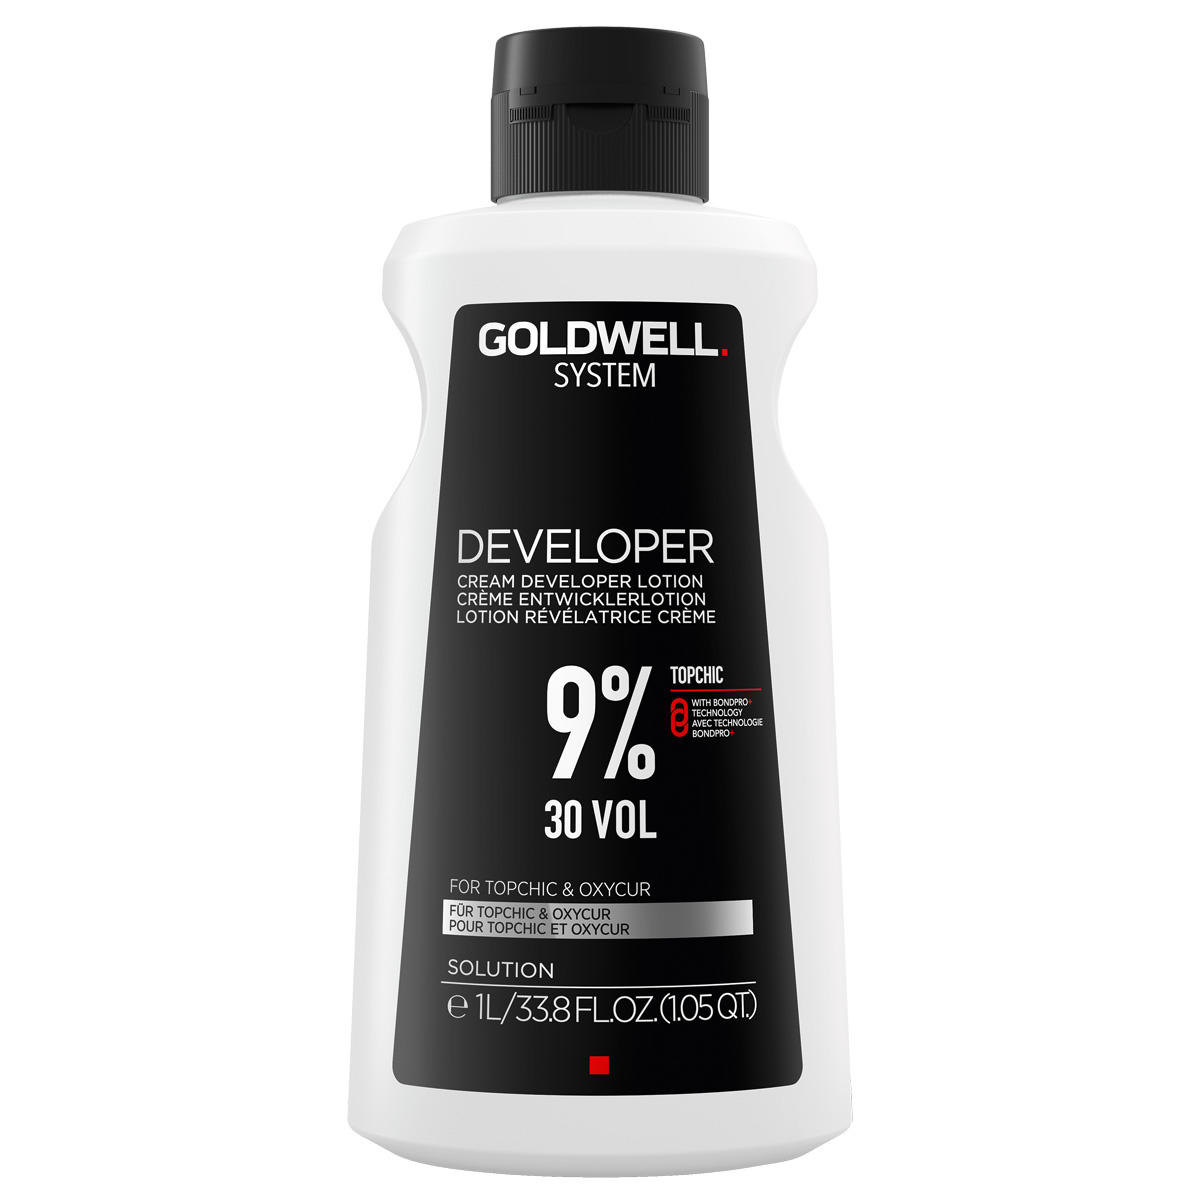 Goldwell System Developer 9 % - 30 Vol. 1 Liter - 1